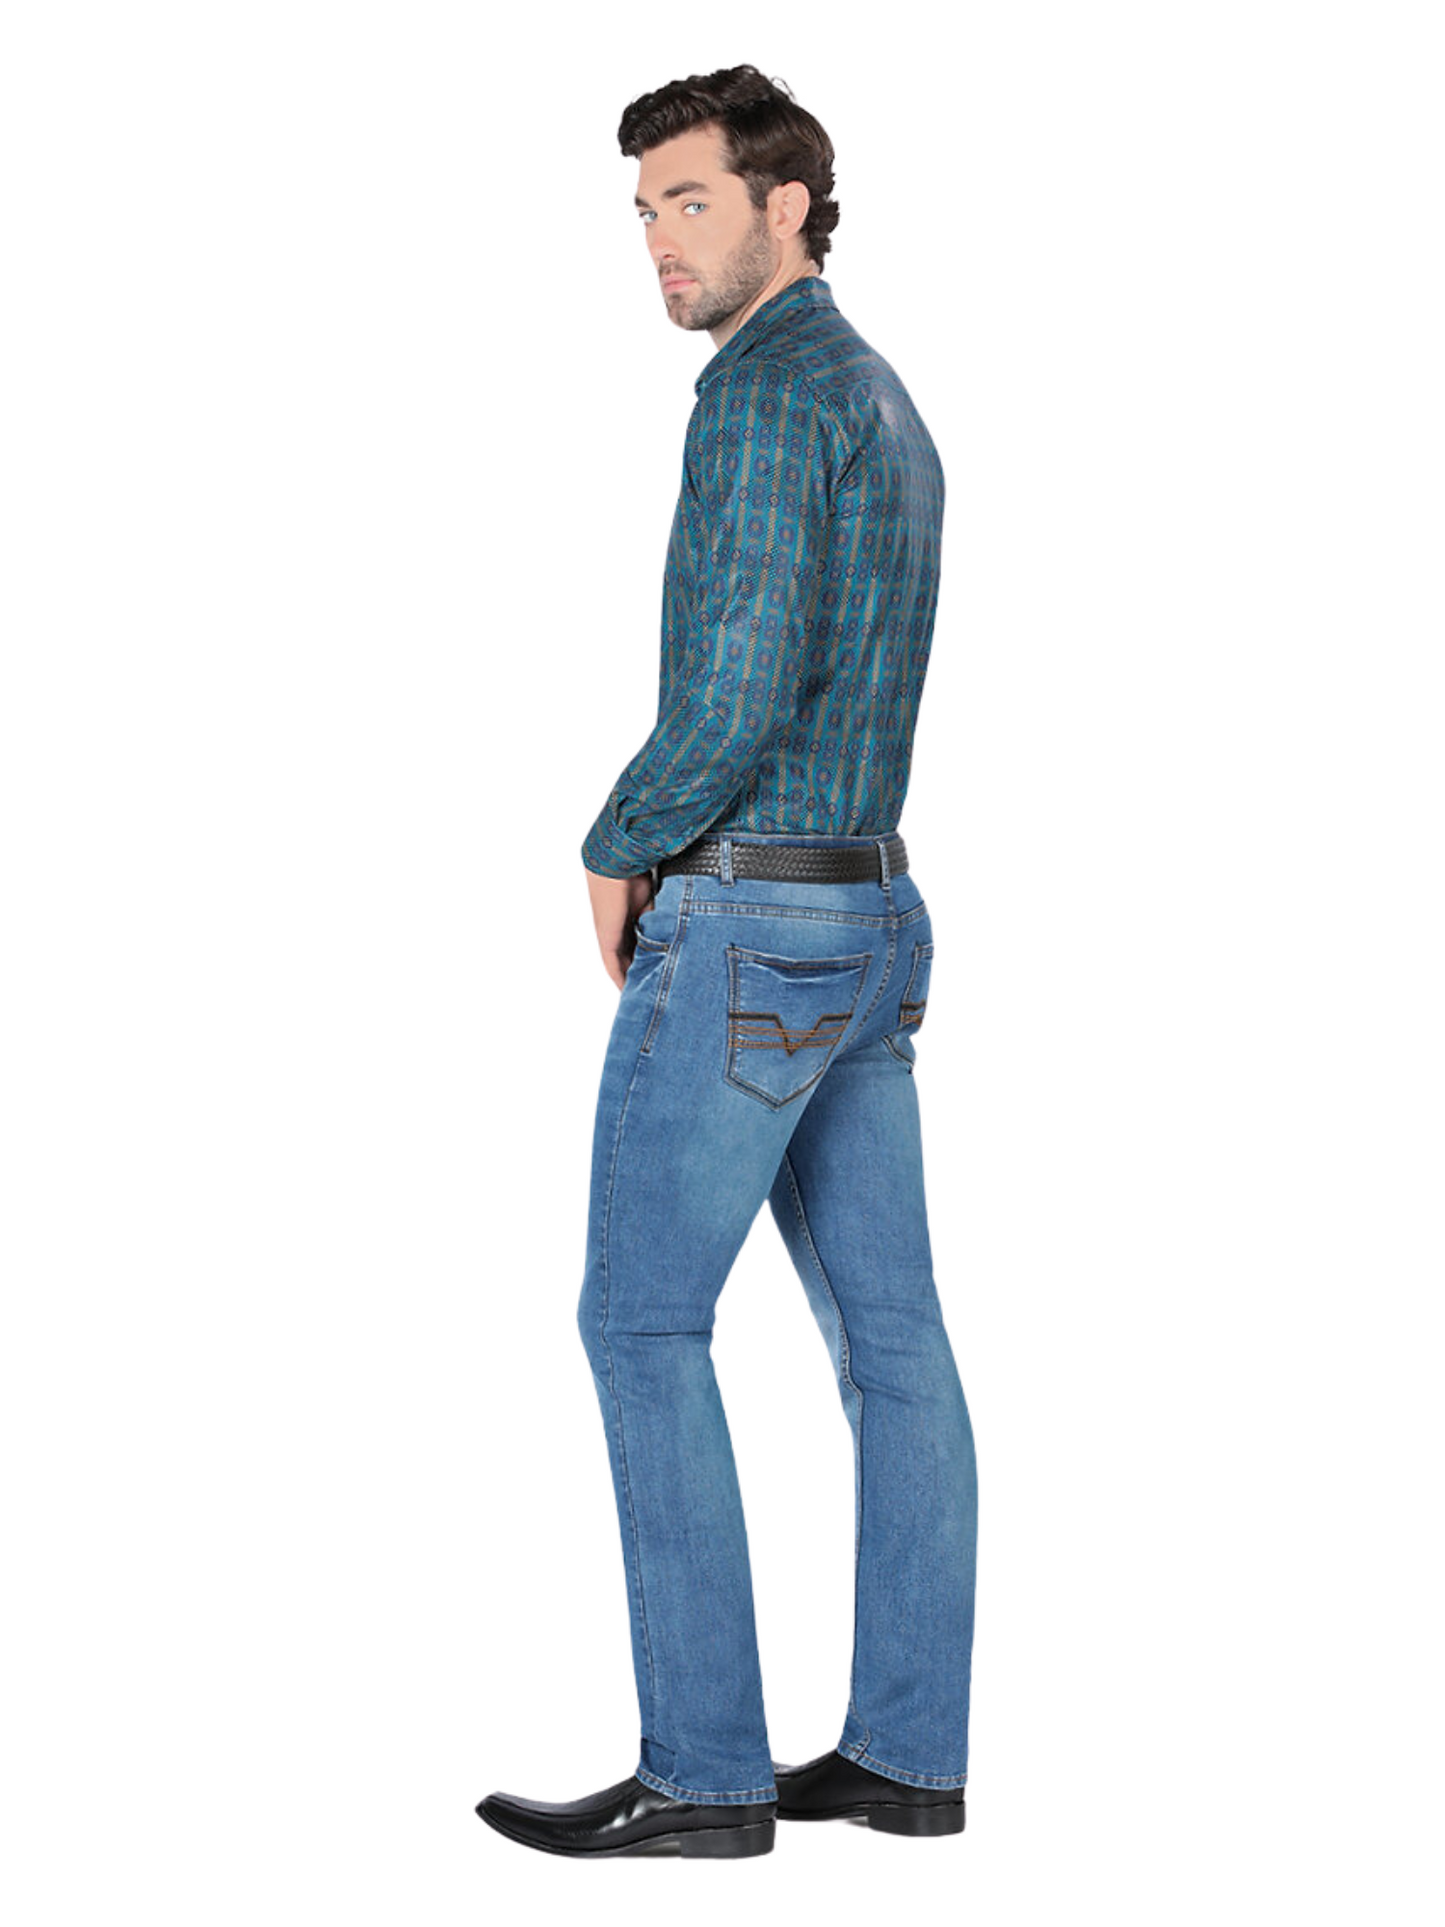 Stretch Denim Jeans for Men 'Montero' - ID: 5310 Denim Jeans Montero